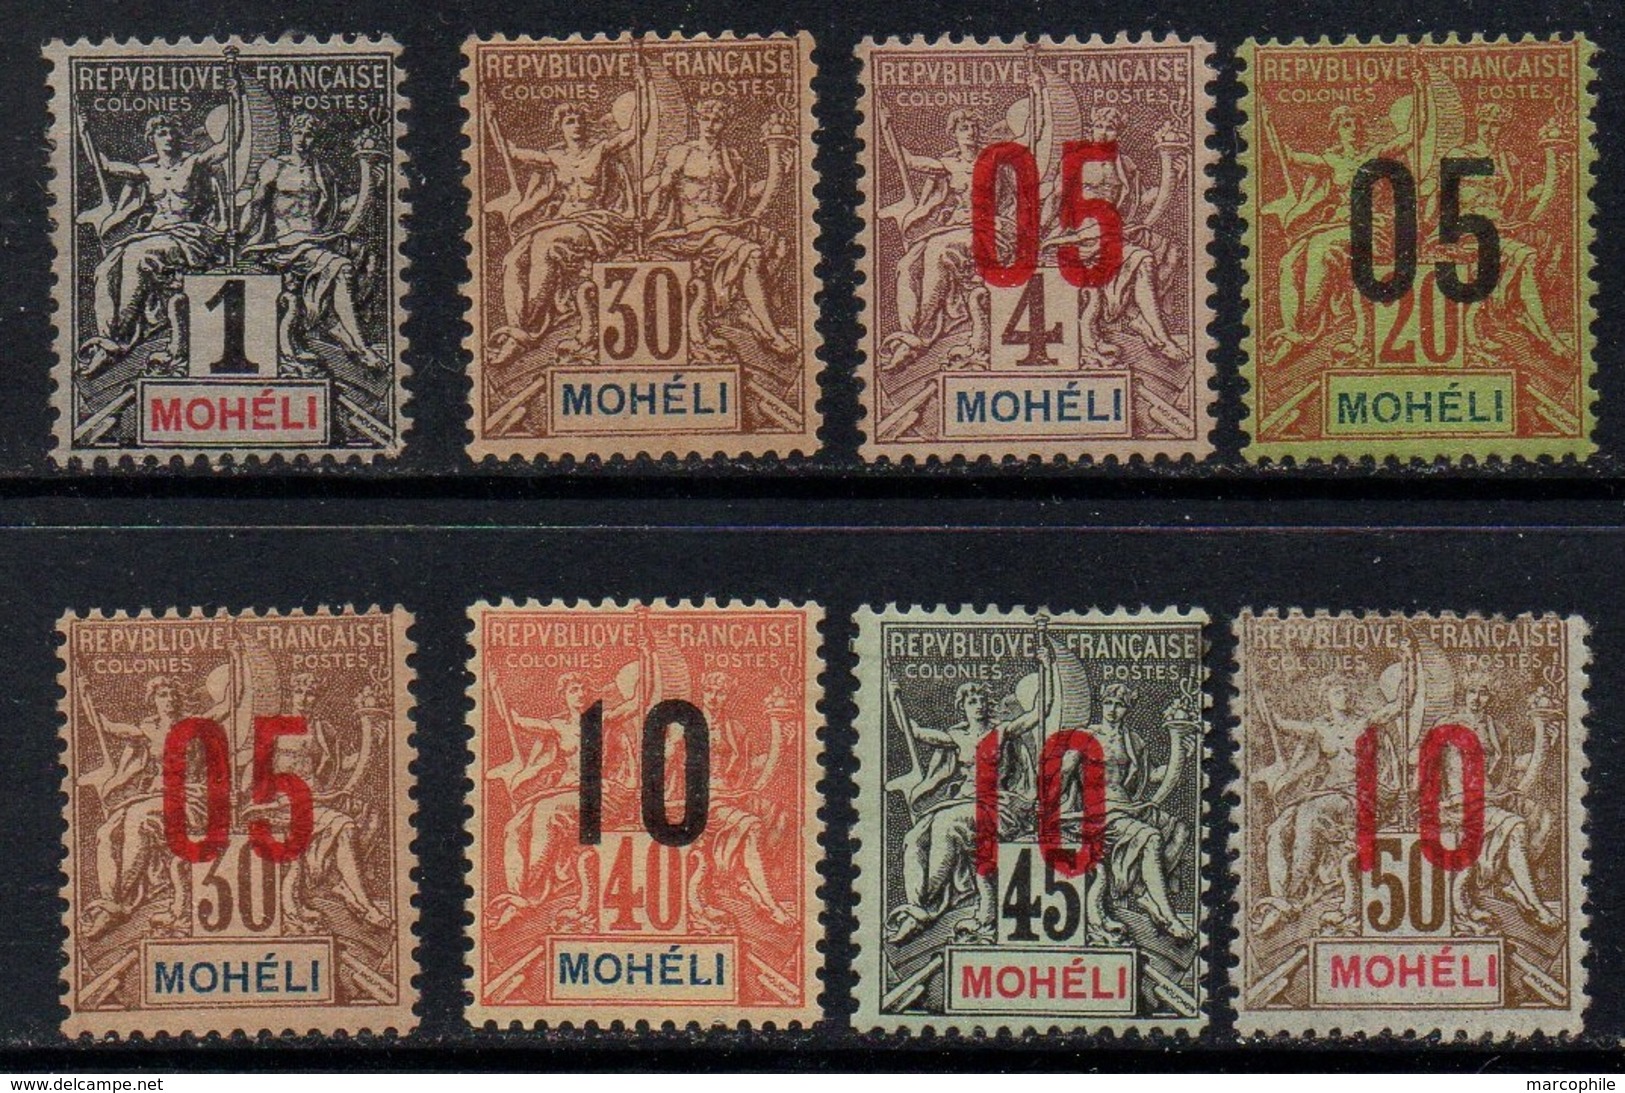 MOHELI / ENSEMBLE DE TIMBRES * / COTE > 48.00 EUROS (ref 8013) - Unused Stamps